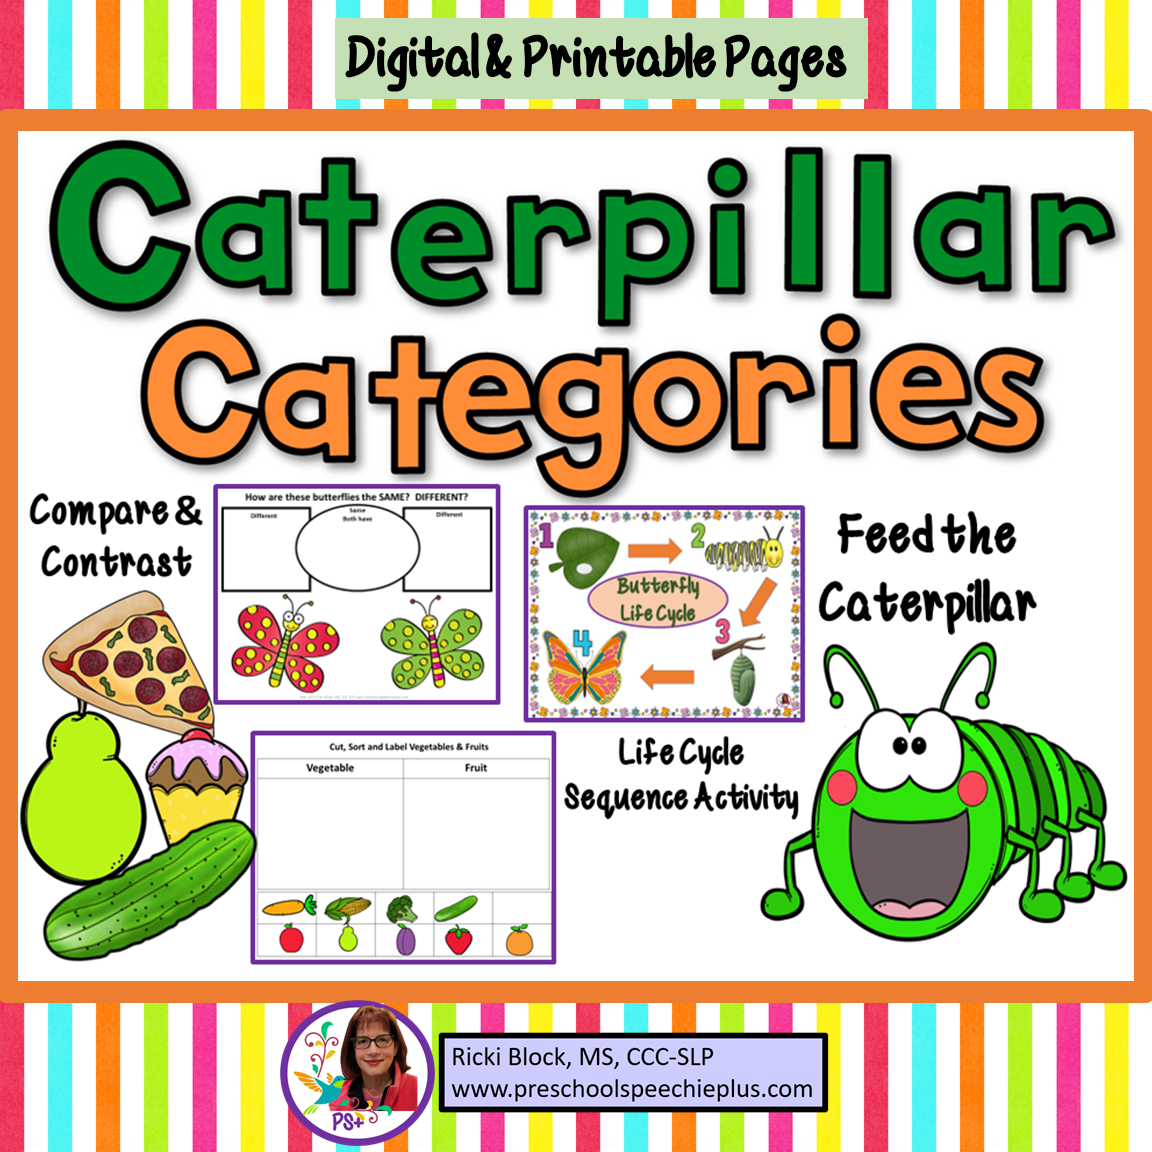 caterpillar category rev.png